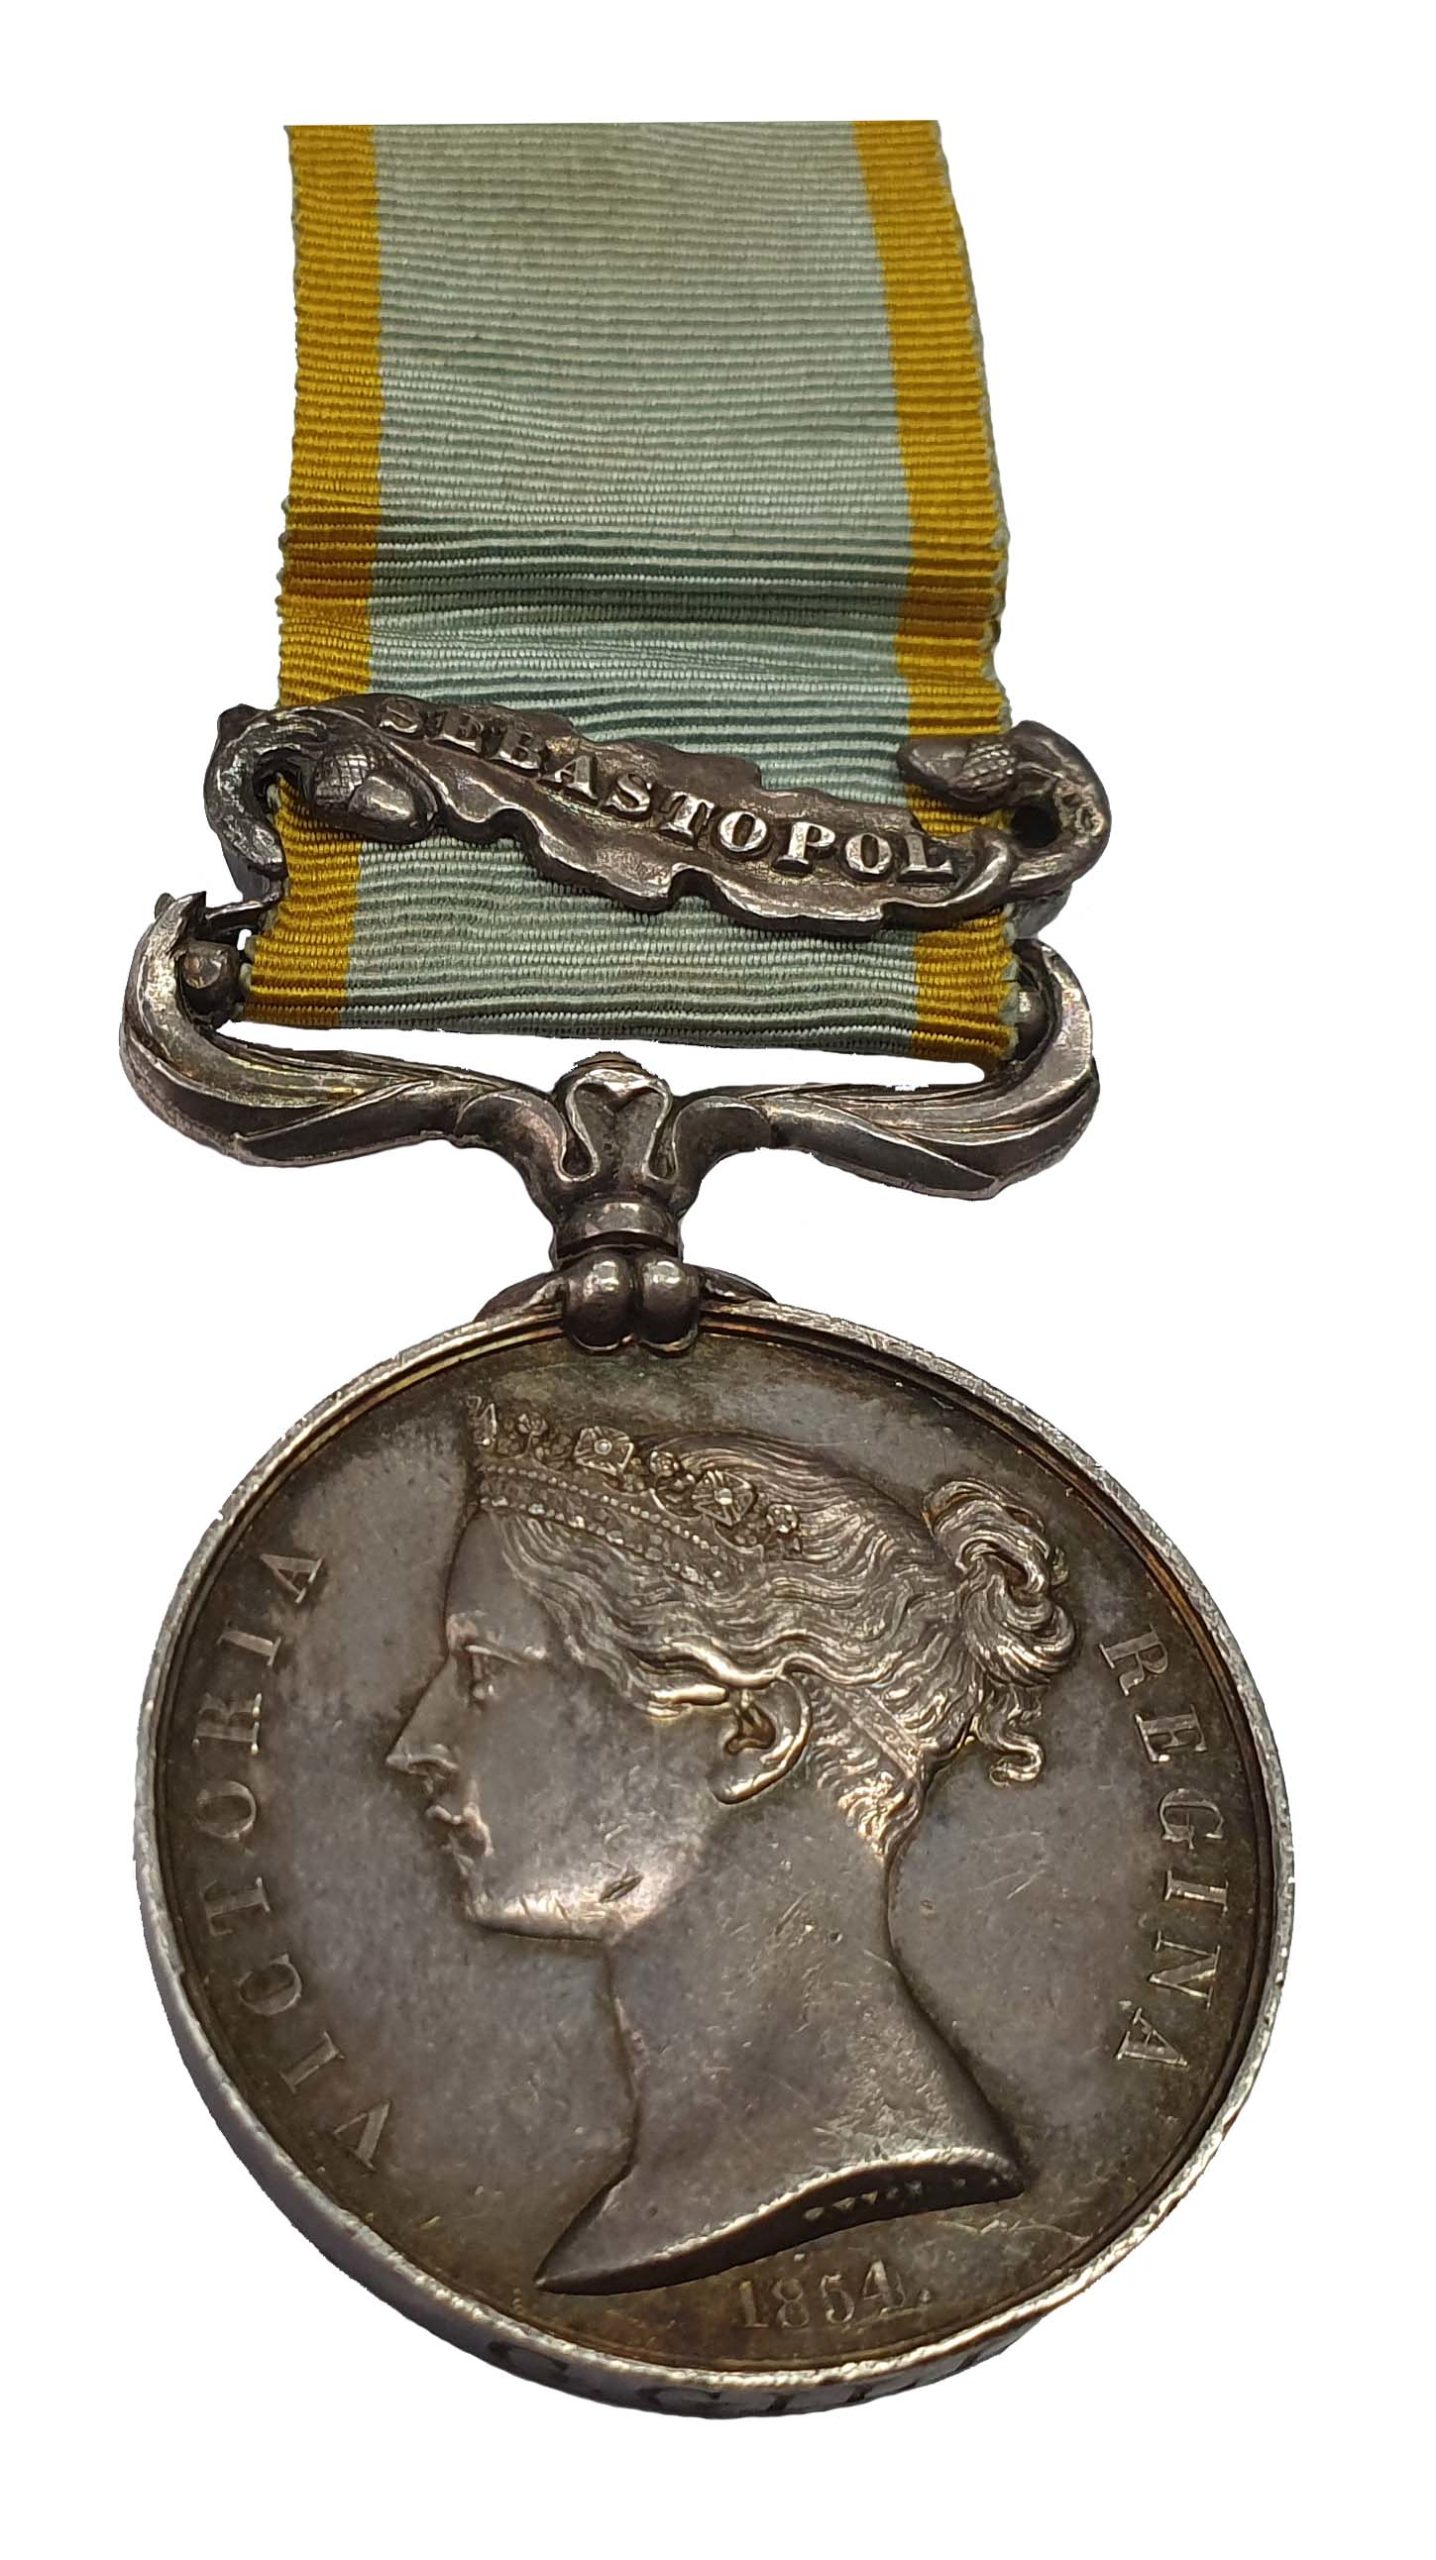 Crimea Medal, 1854-55, one clasp, Sebastopol to George Gill